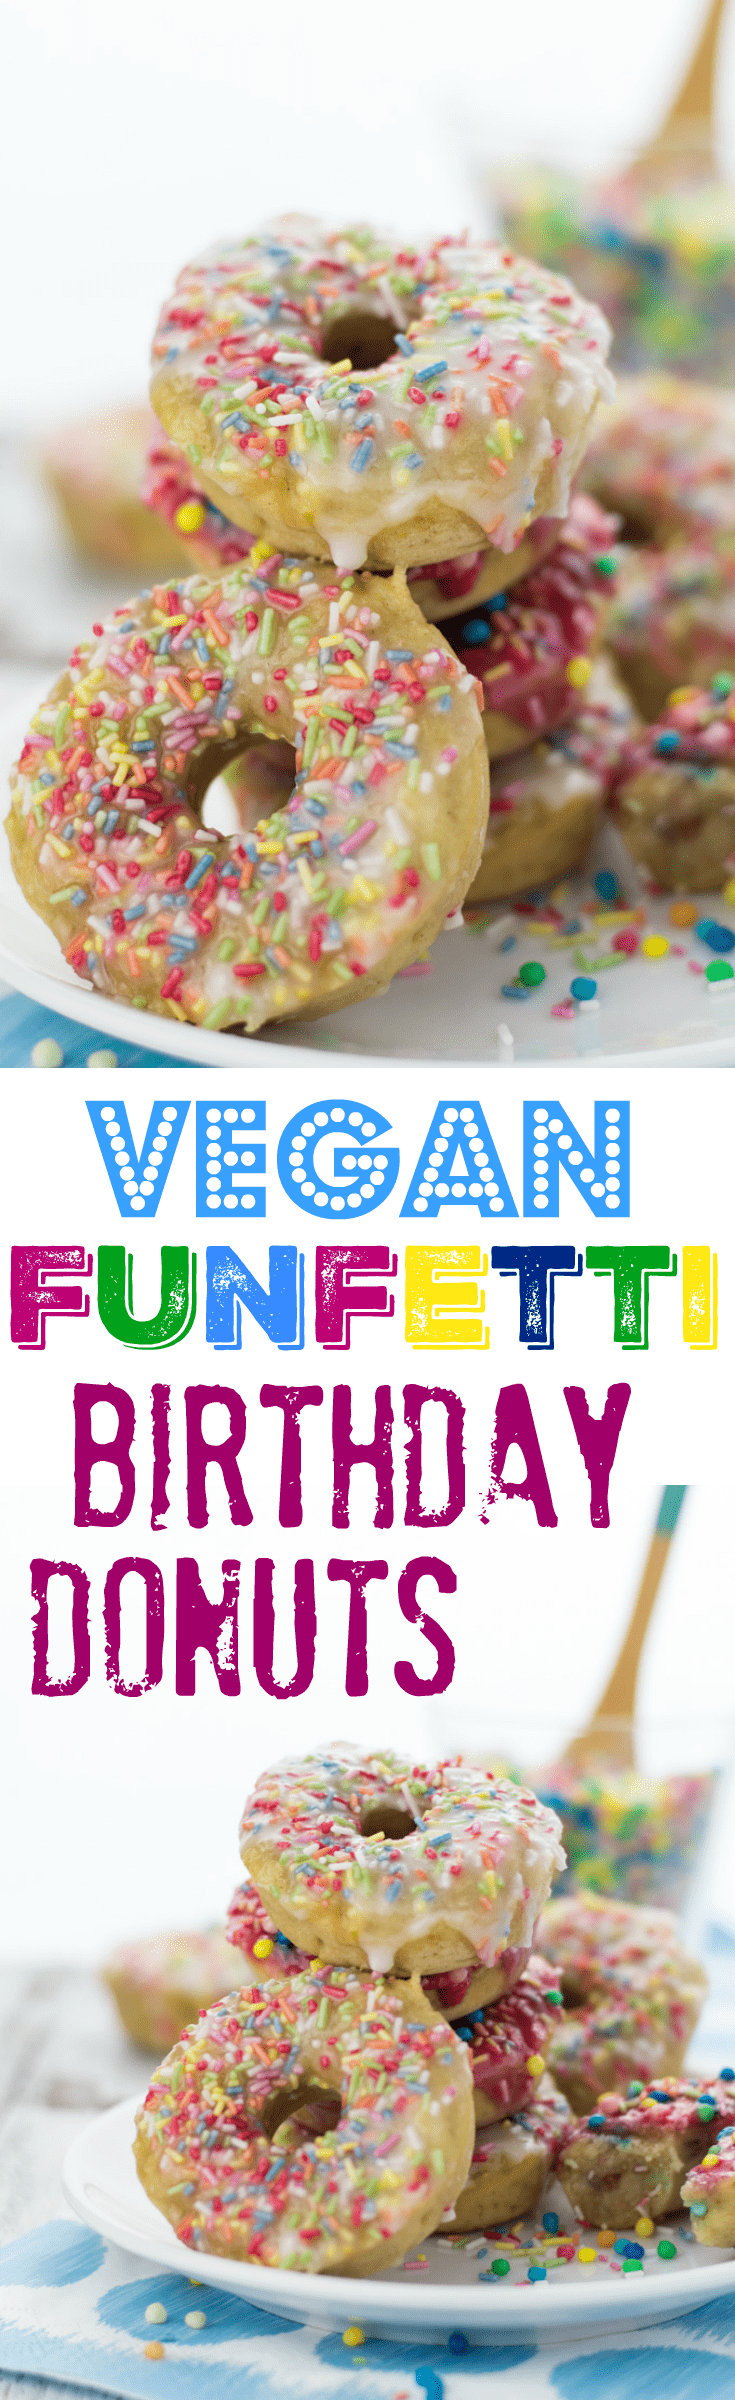 Birthday Donuts with Funfetti